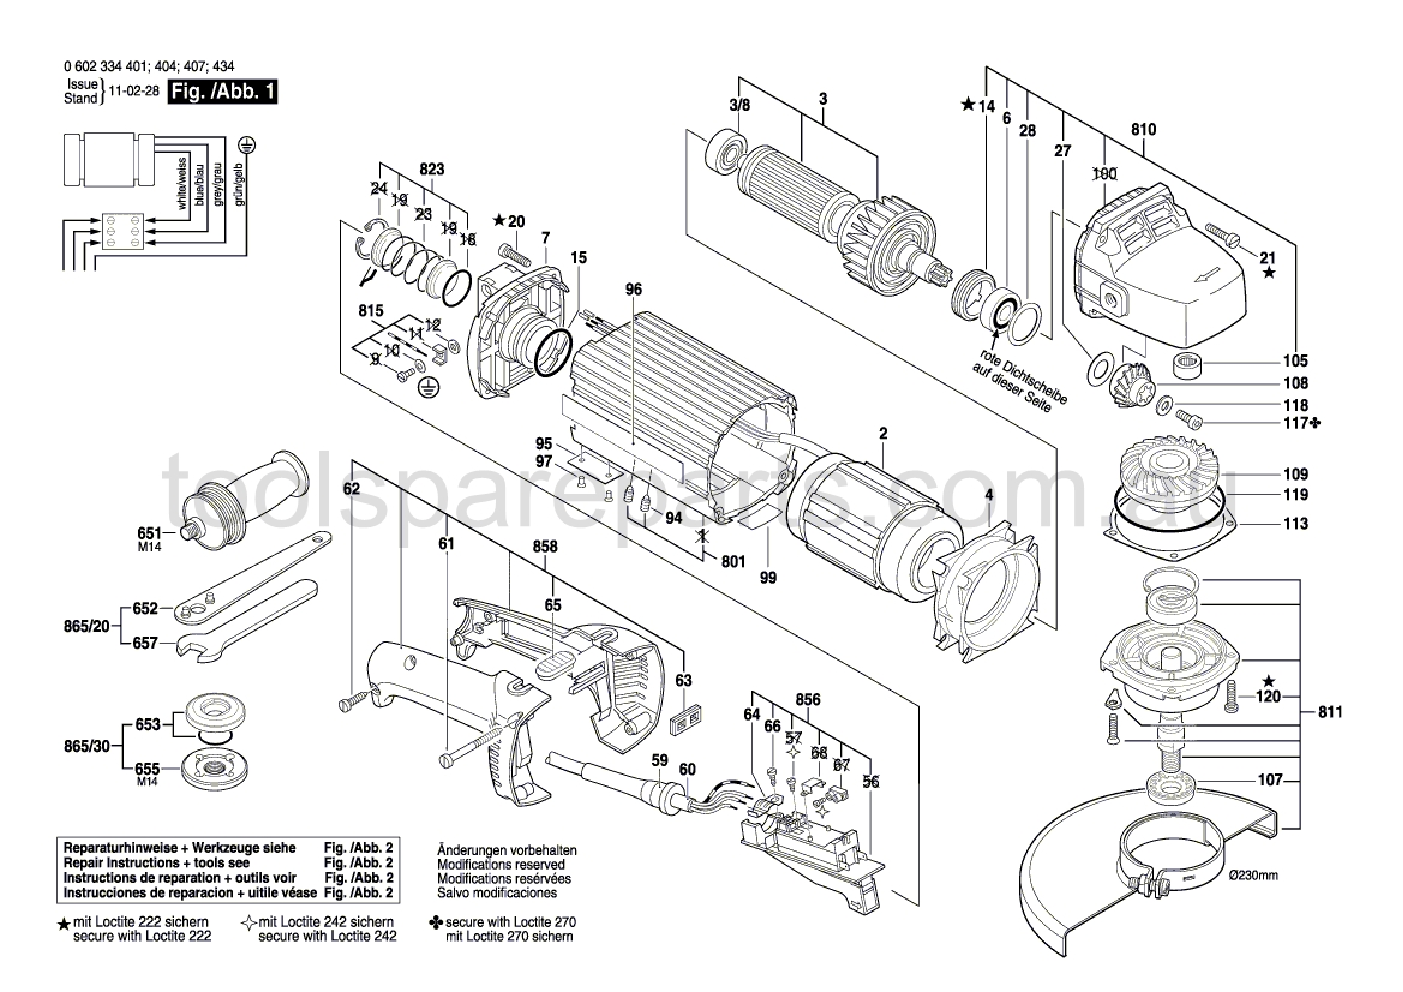 Bosch ---- 0602334407  Diagram 1